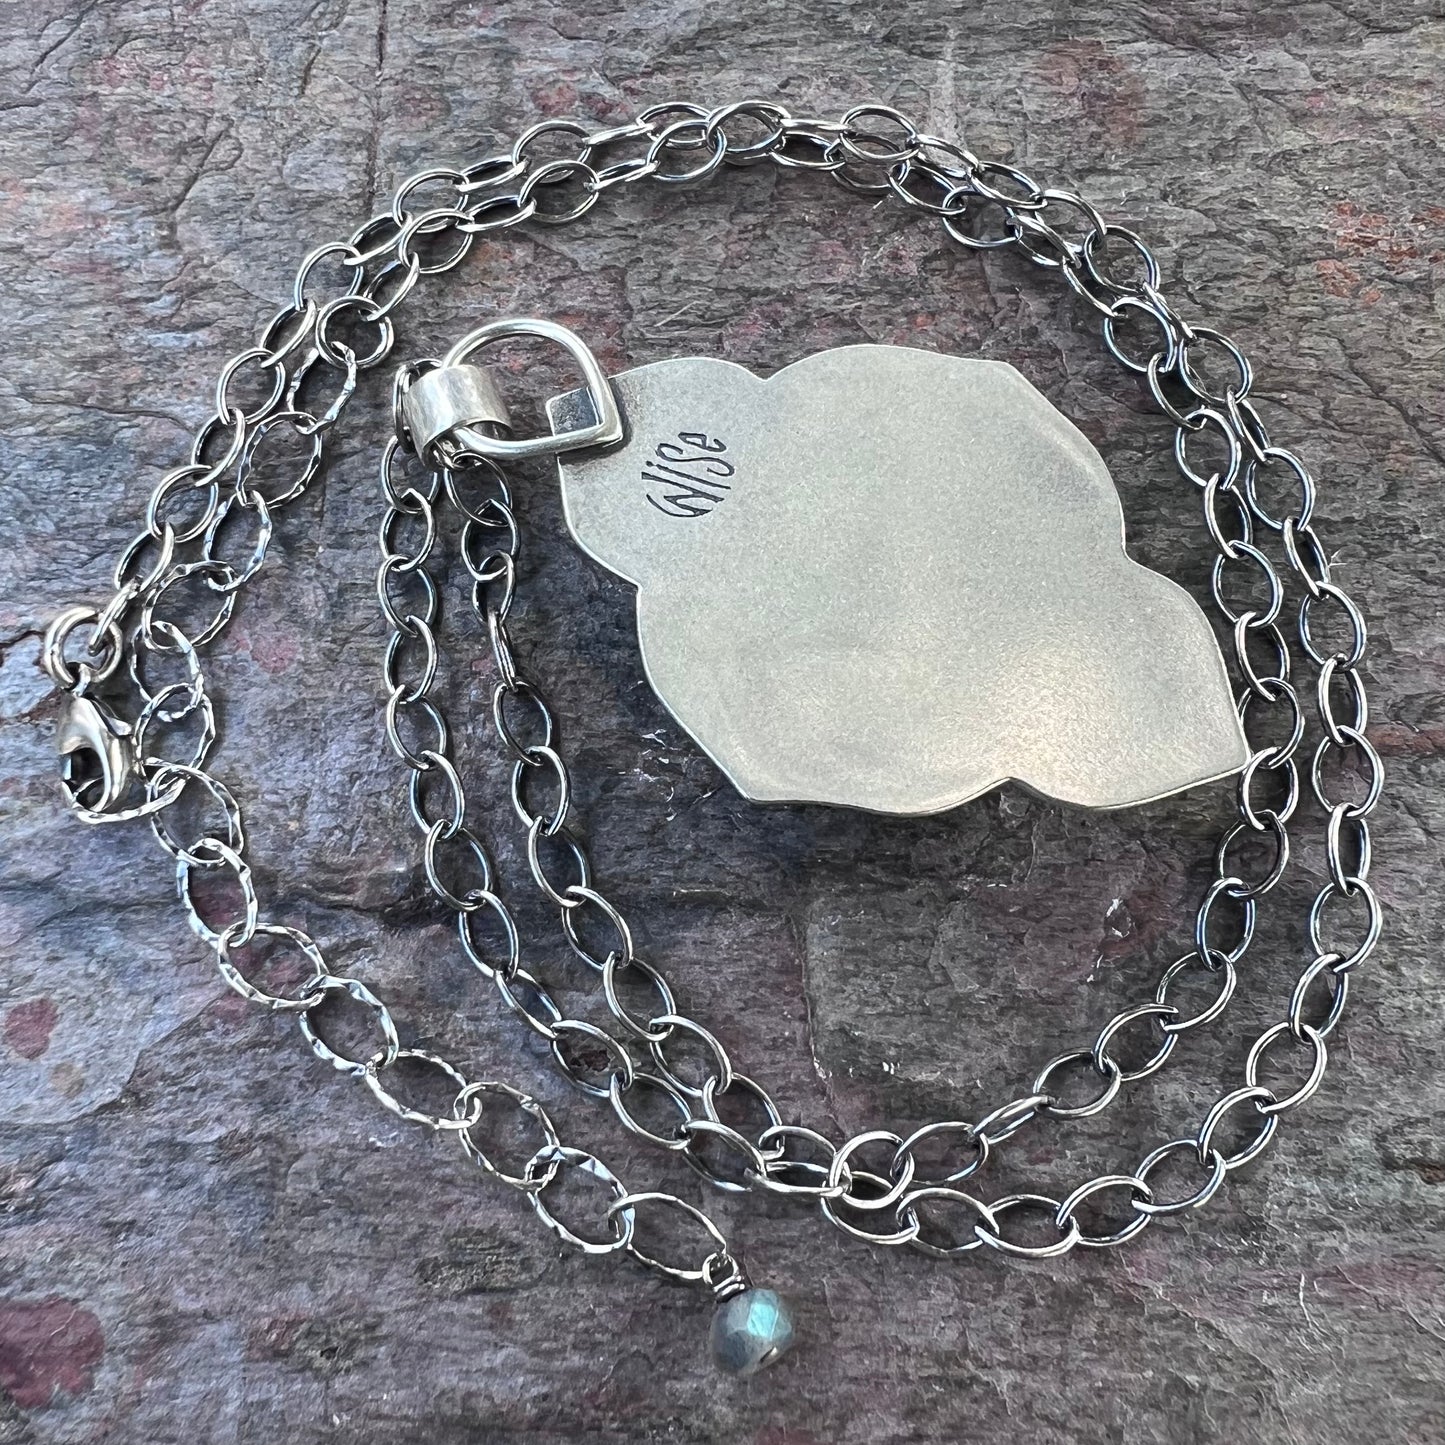 Sterling Silver Labradorite Necklace - Handmade Artisan One of a Kind Druzy and Labradorite Pendant